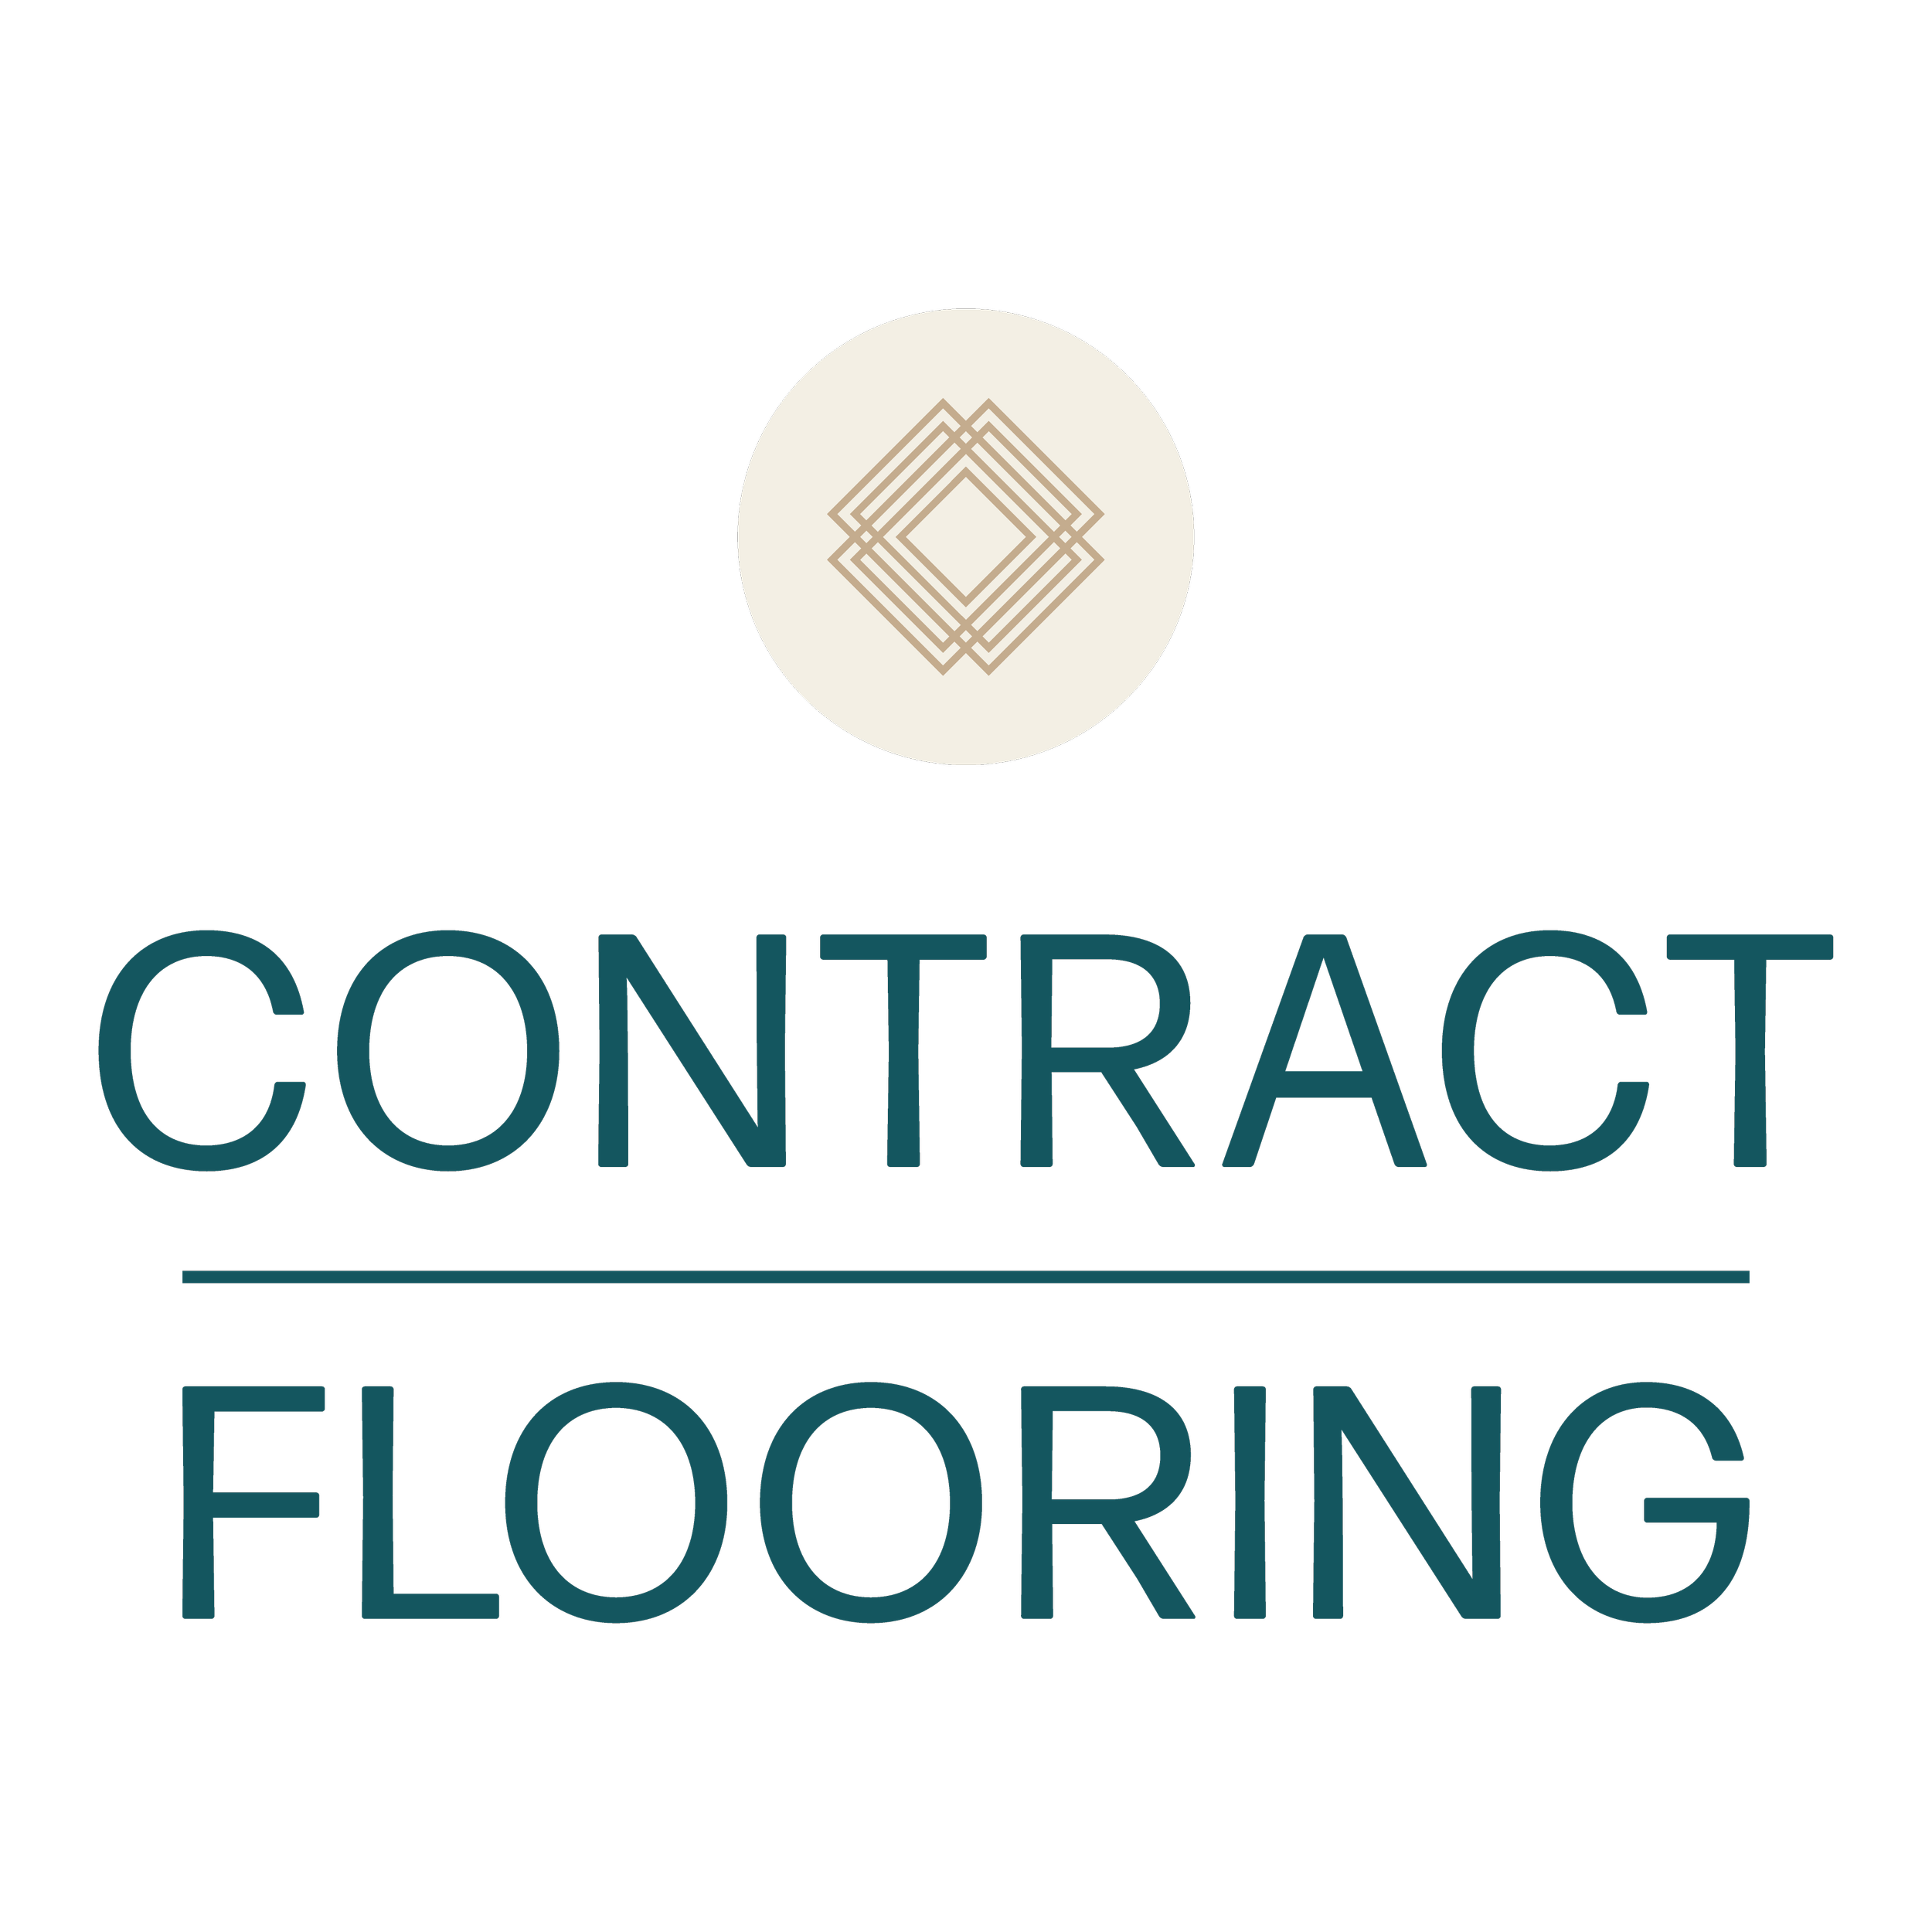 Contract Flooring, LLC